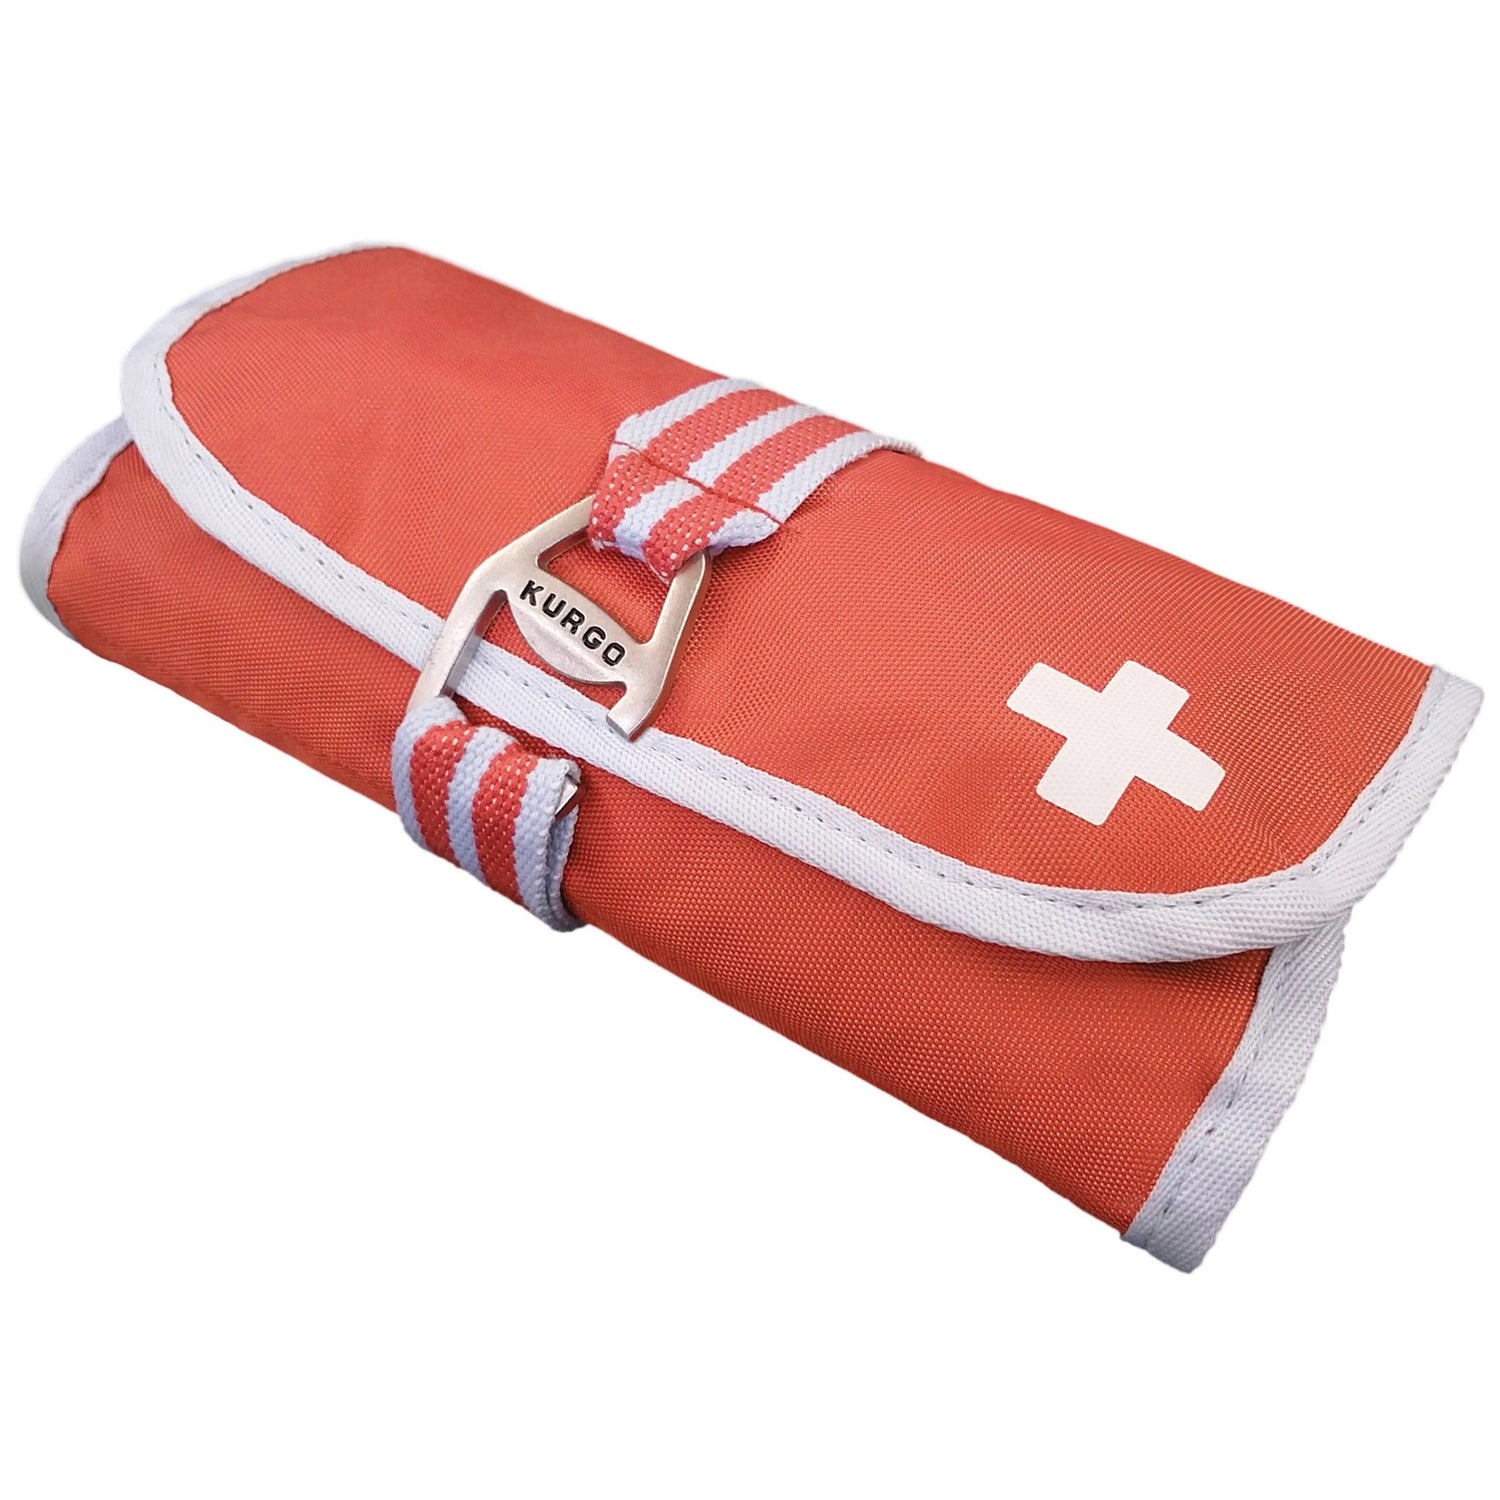 Kurgo Dog First Aid Kit Set